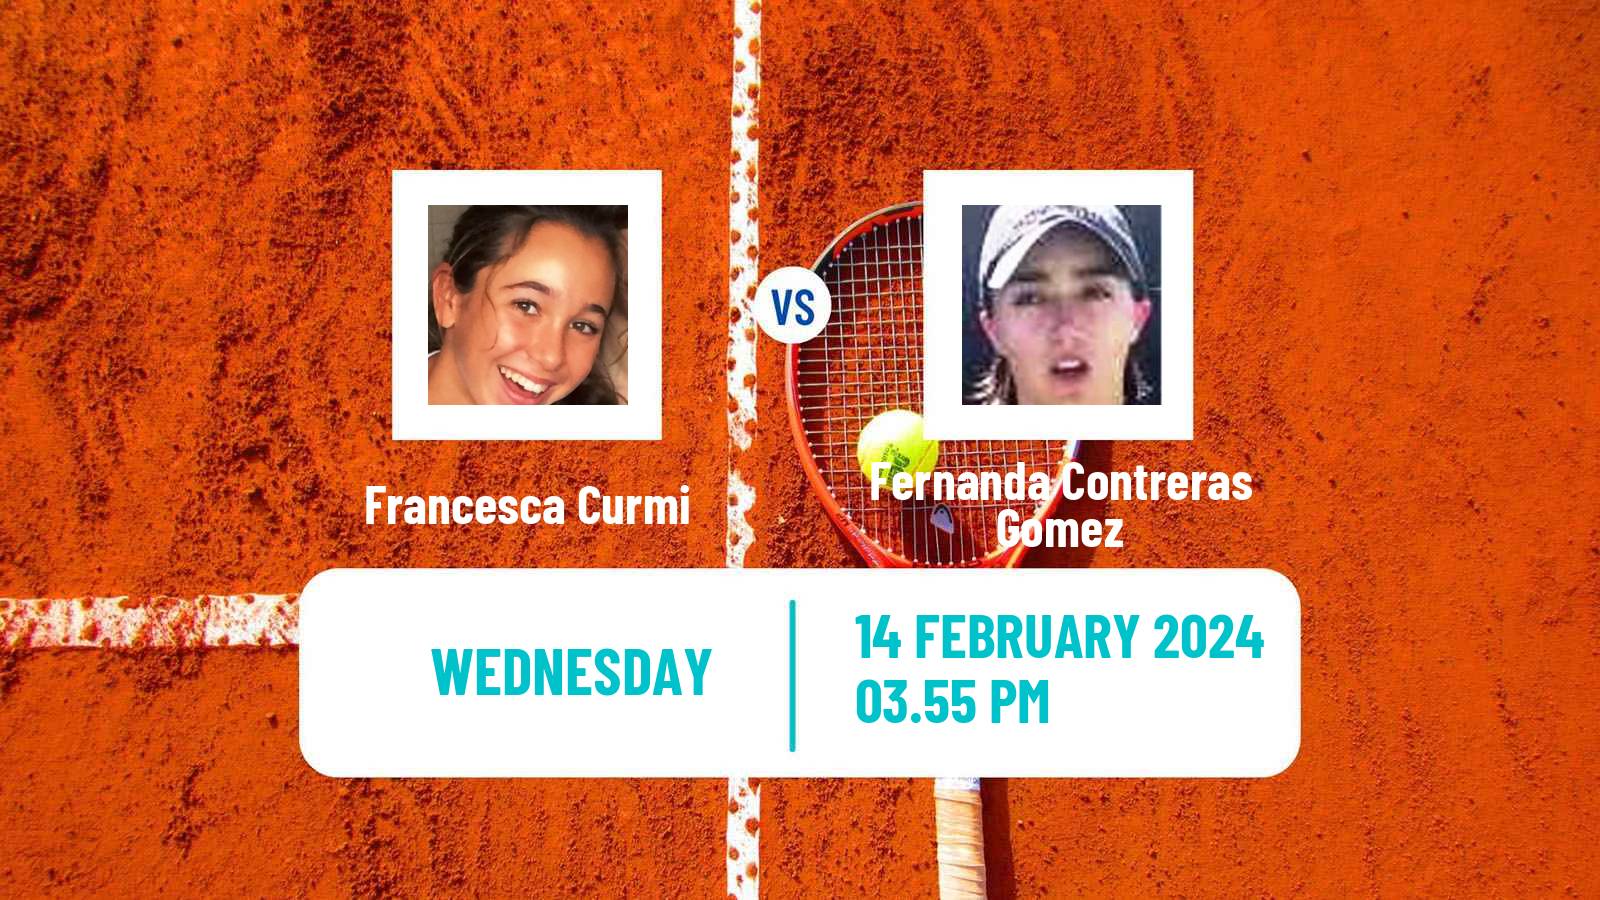 Tennis ITF W50 Morelia Women Francesca Curmi - Fernanda Contreras Gomez